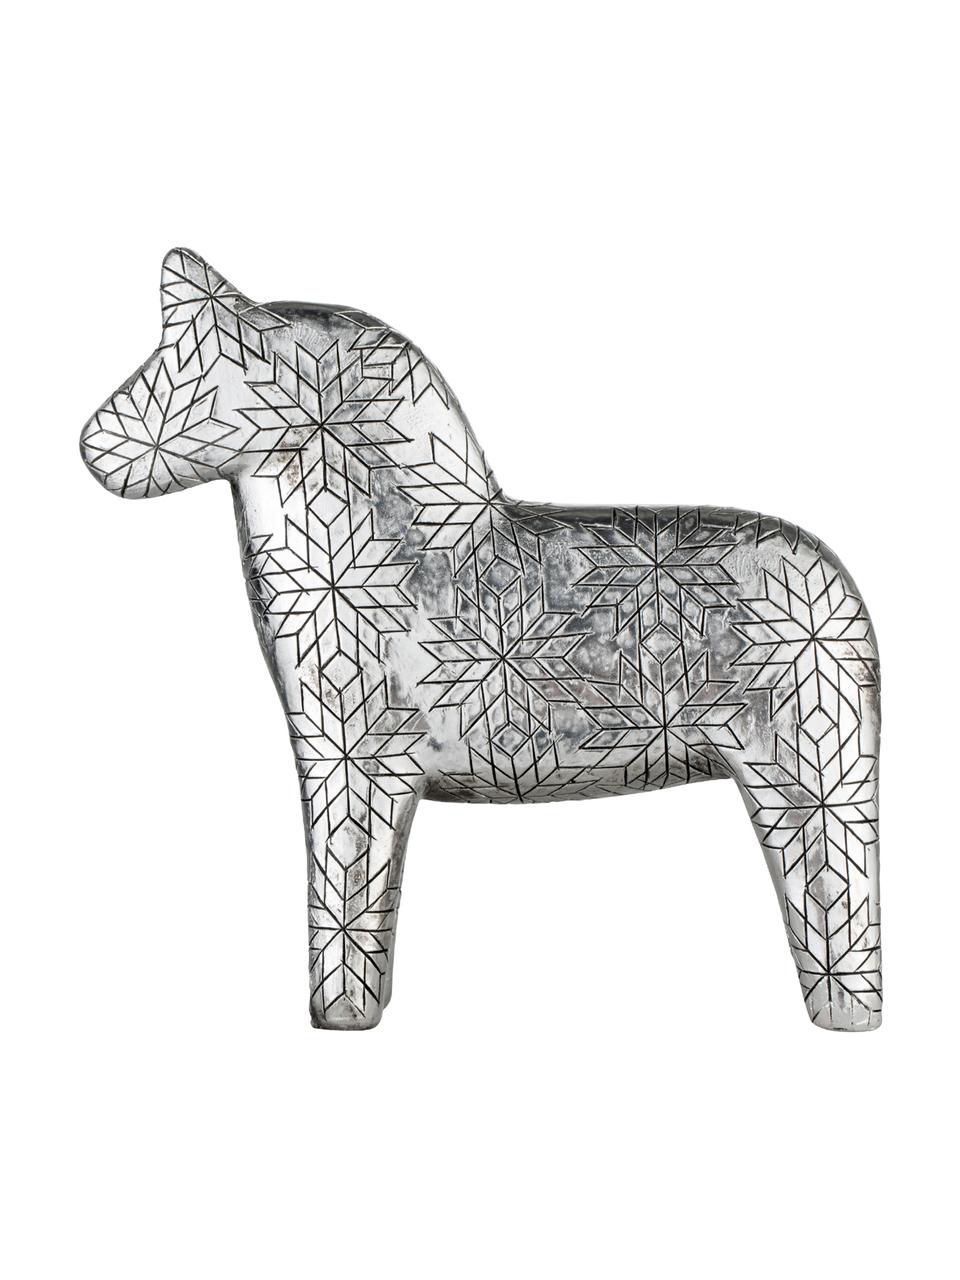 Deko-Objekt Serafina Horse, Polyresin, Silberfarben, 13 x 13 cm